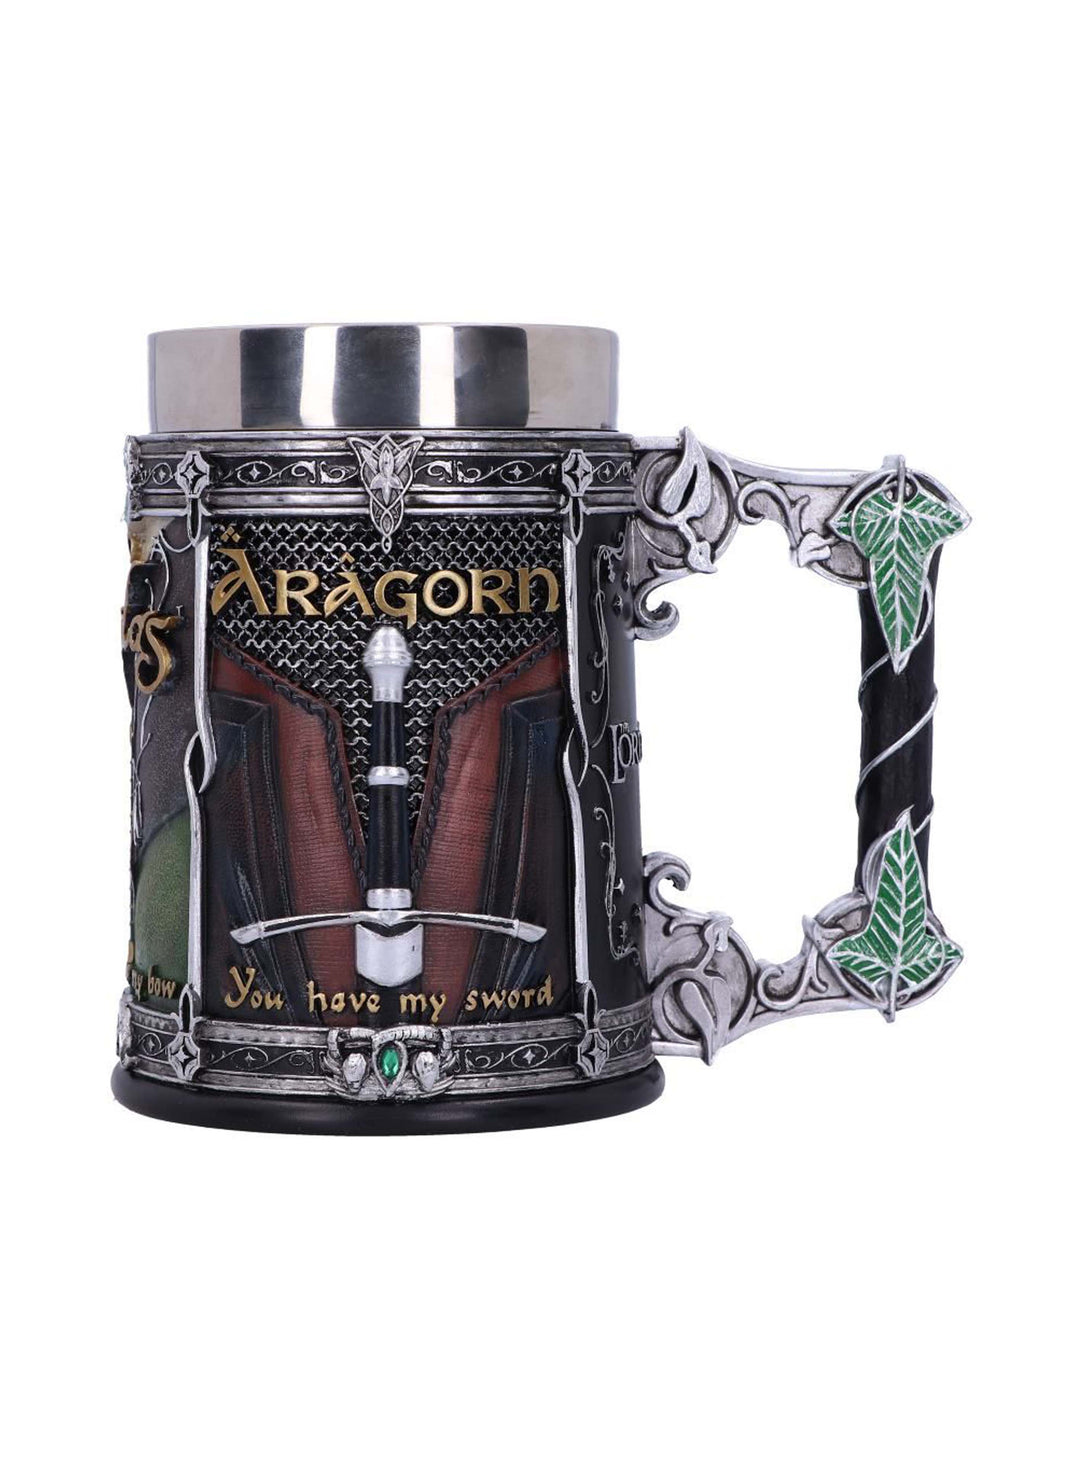  Aragorn, Lord of the ring tankard 